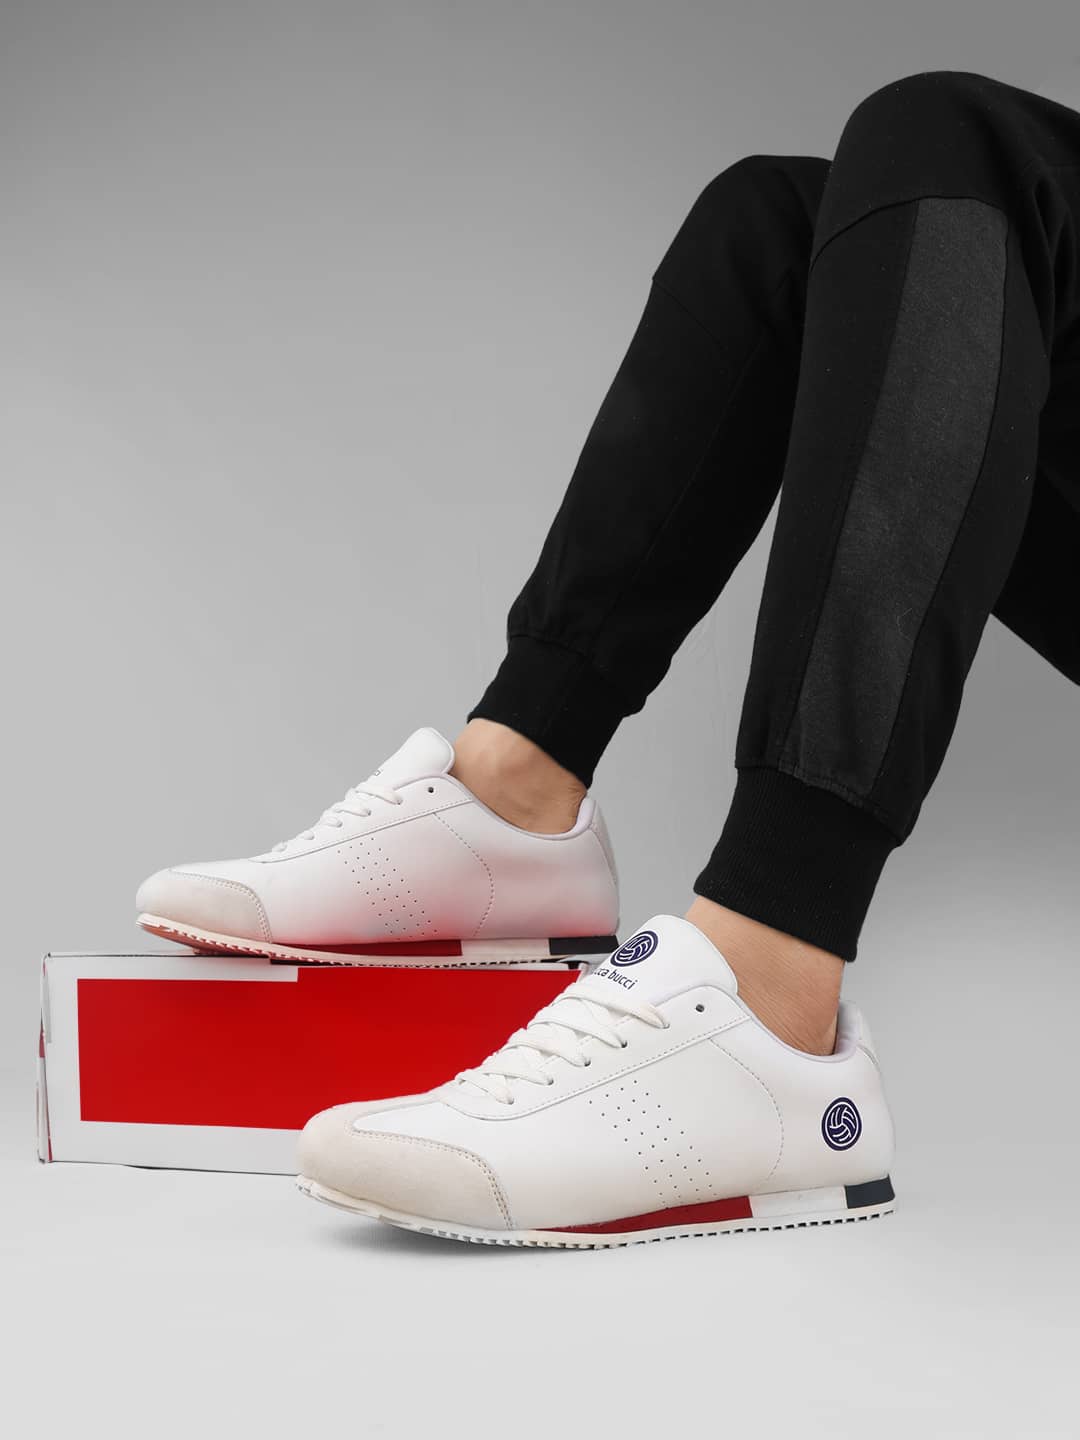 Bacca Bucci Zest RetroDash Sneakers – Sleek White Elegance with a Sporty Red Heel Pop